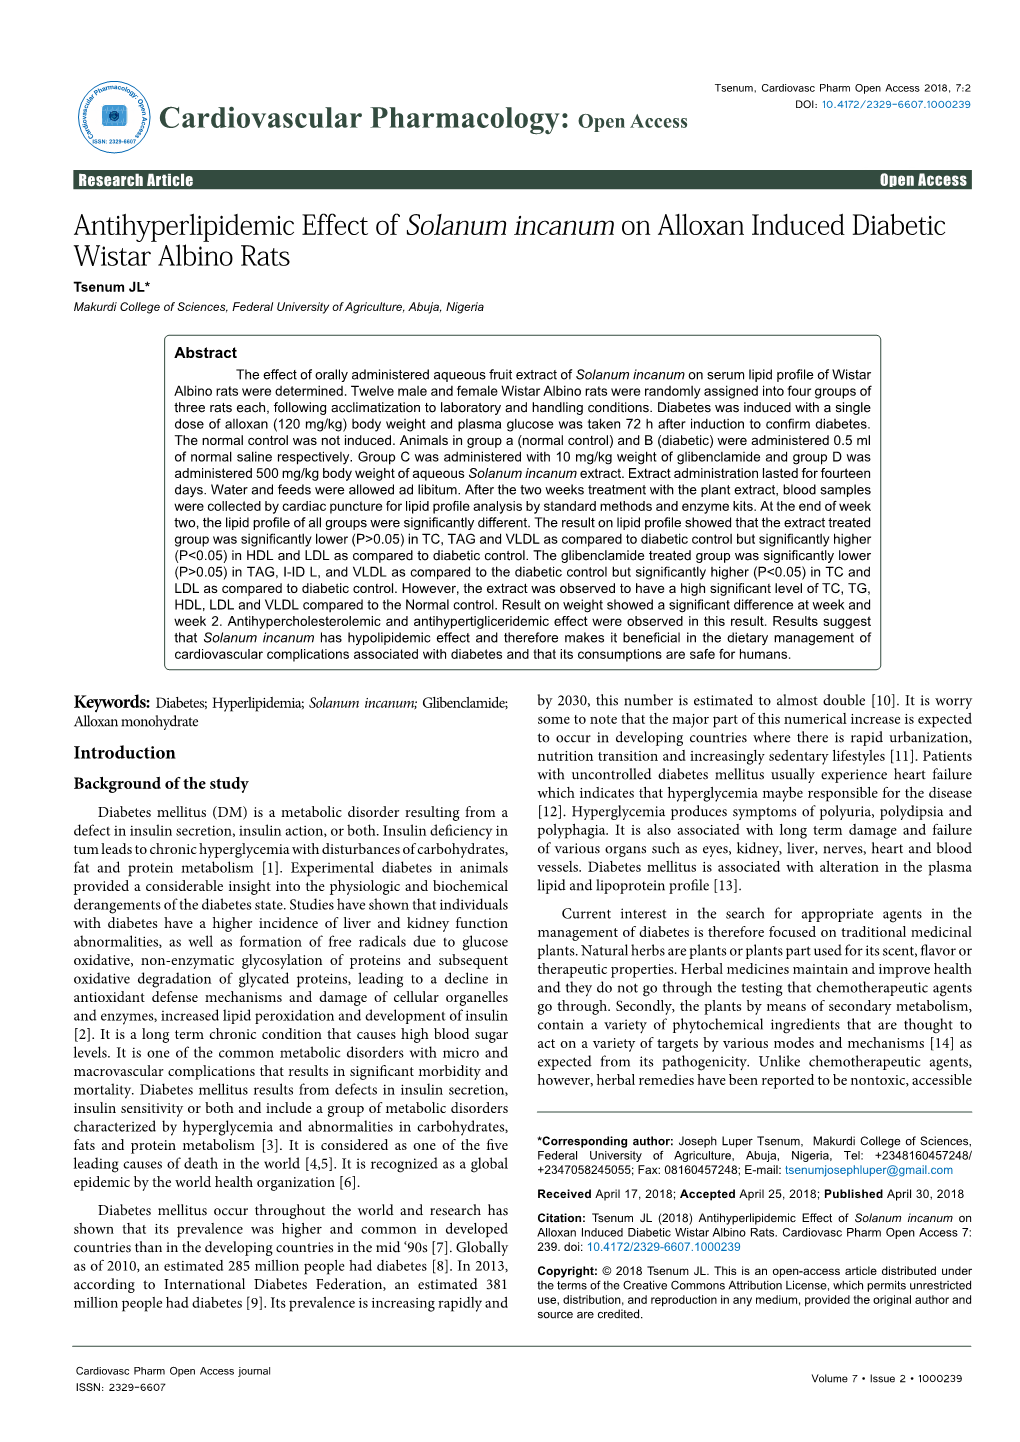 Antihyperlipidemic Effect of Solanum Incanum on Alloxan Induced